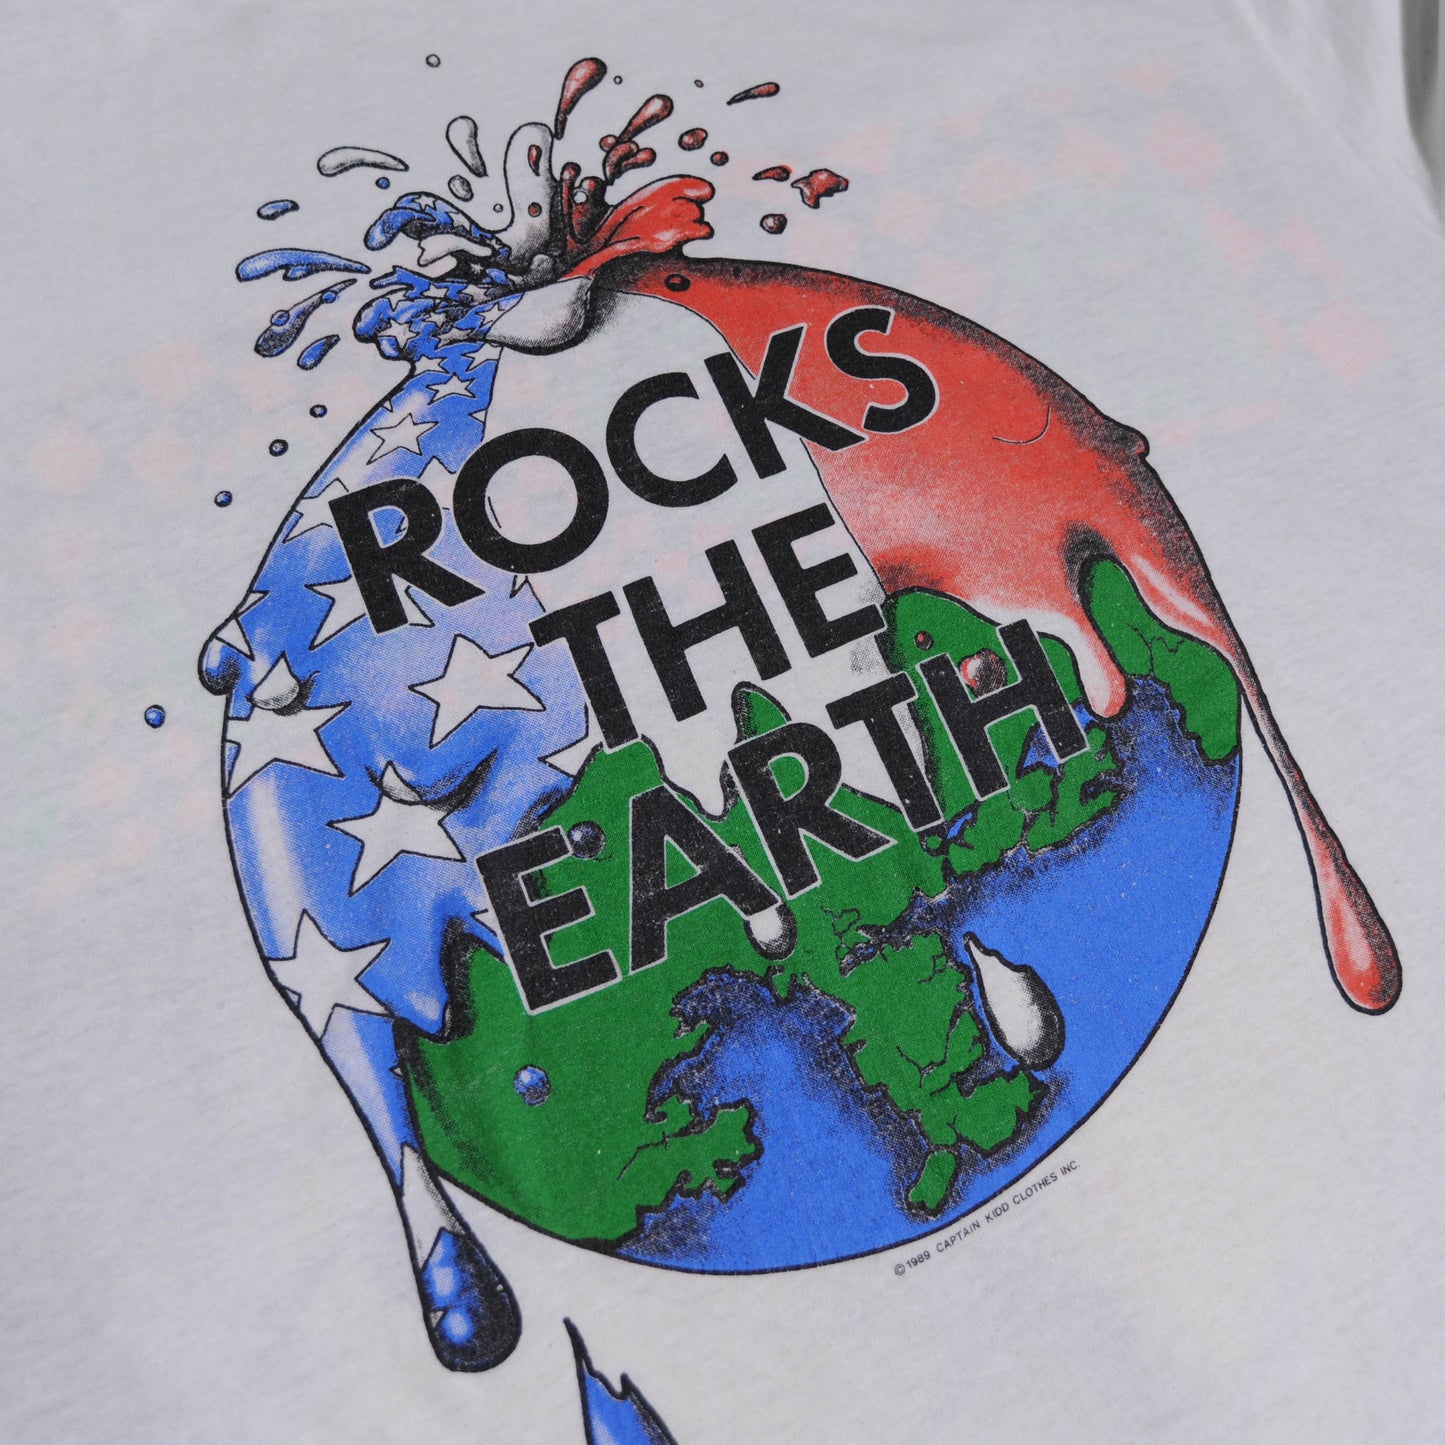 80's Bon Jovi 1989Rock the earthツアーTシャツ(XL)/A2166T-O